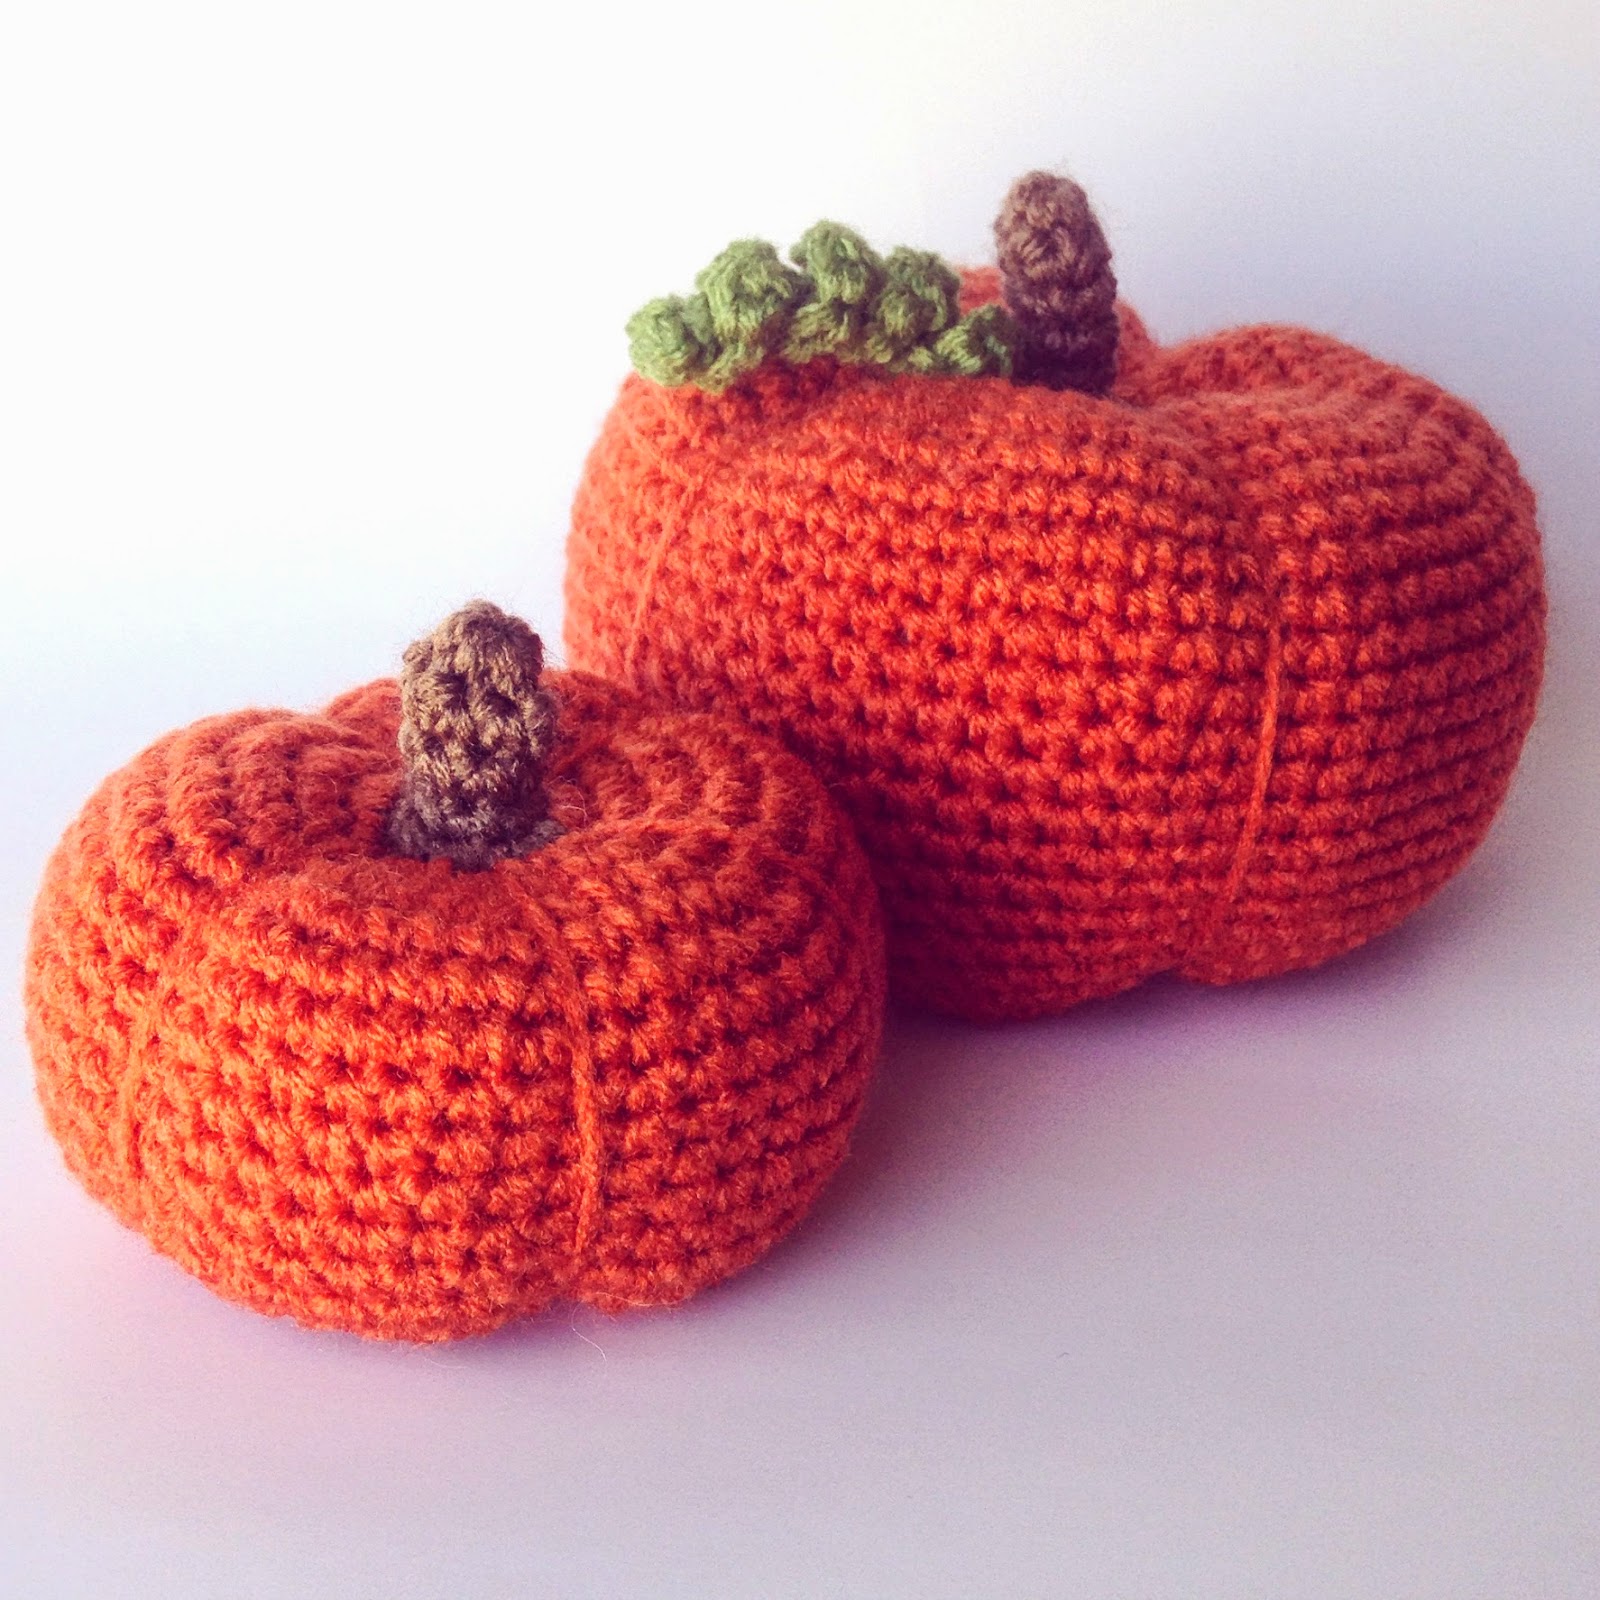 5 Little Monsters Crocheted Pumpkins In Two Sizes Free Pattern